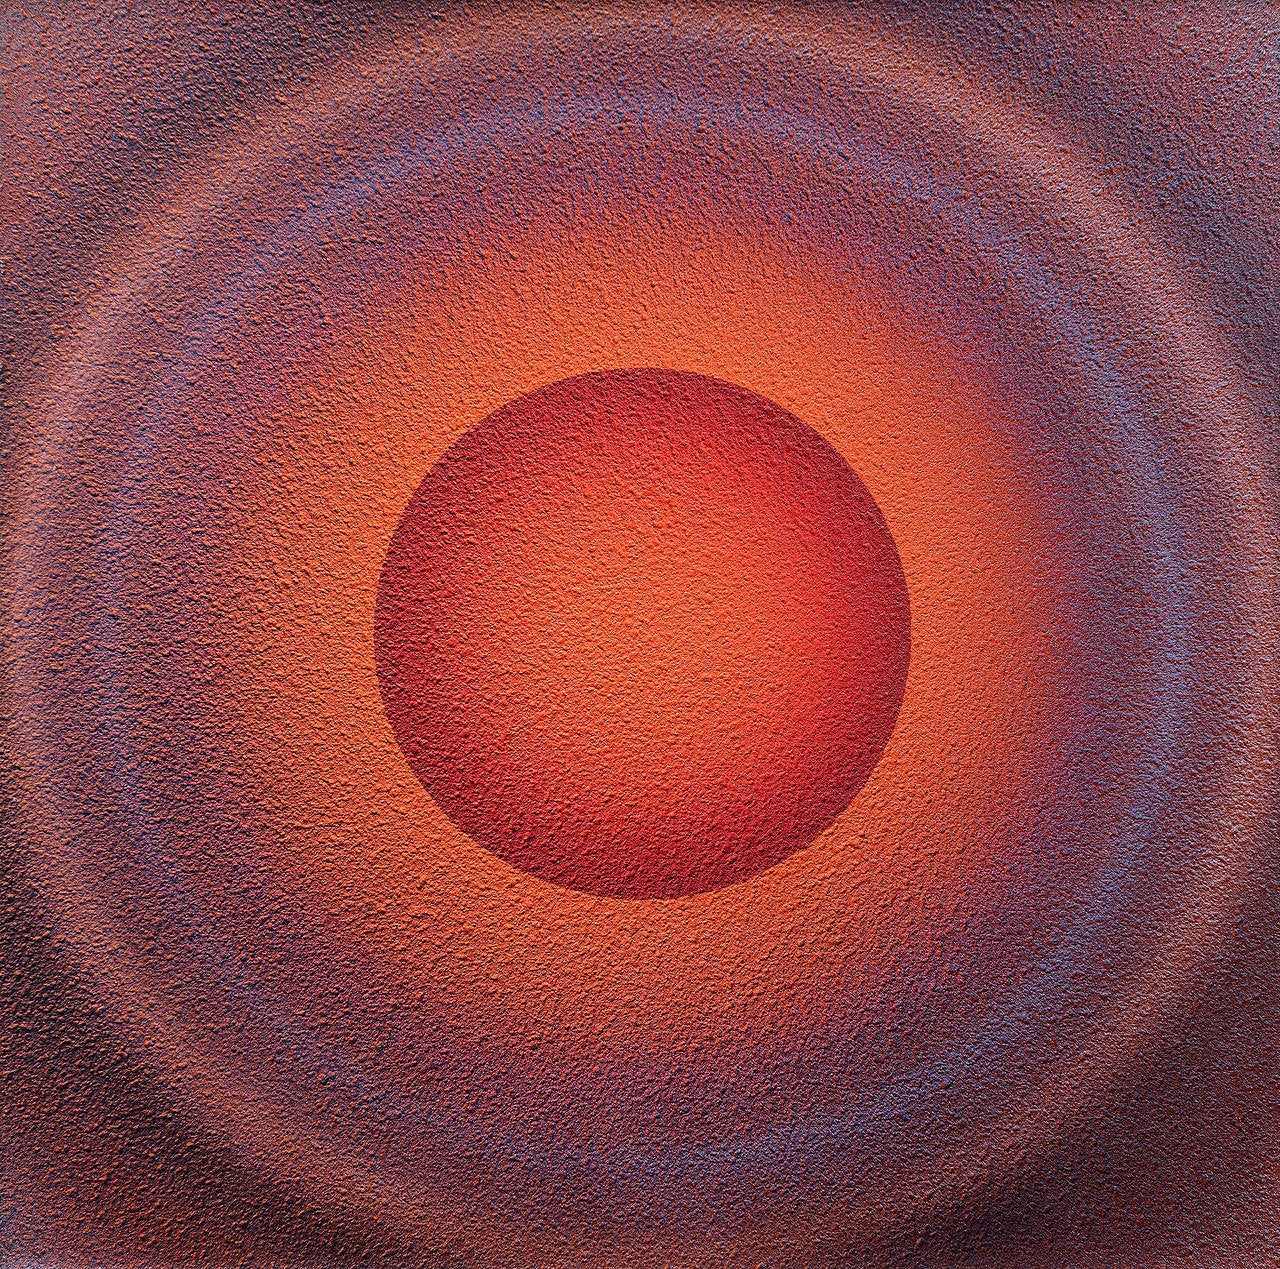 Tadasky / Tadasuke Kuwayama Abstract Painting - E-137A (Textured Red with Blue)